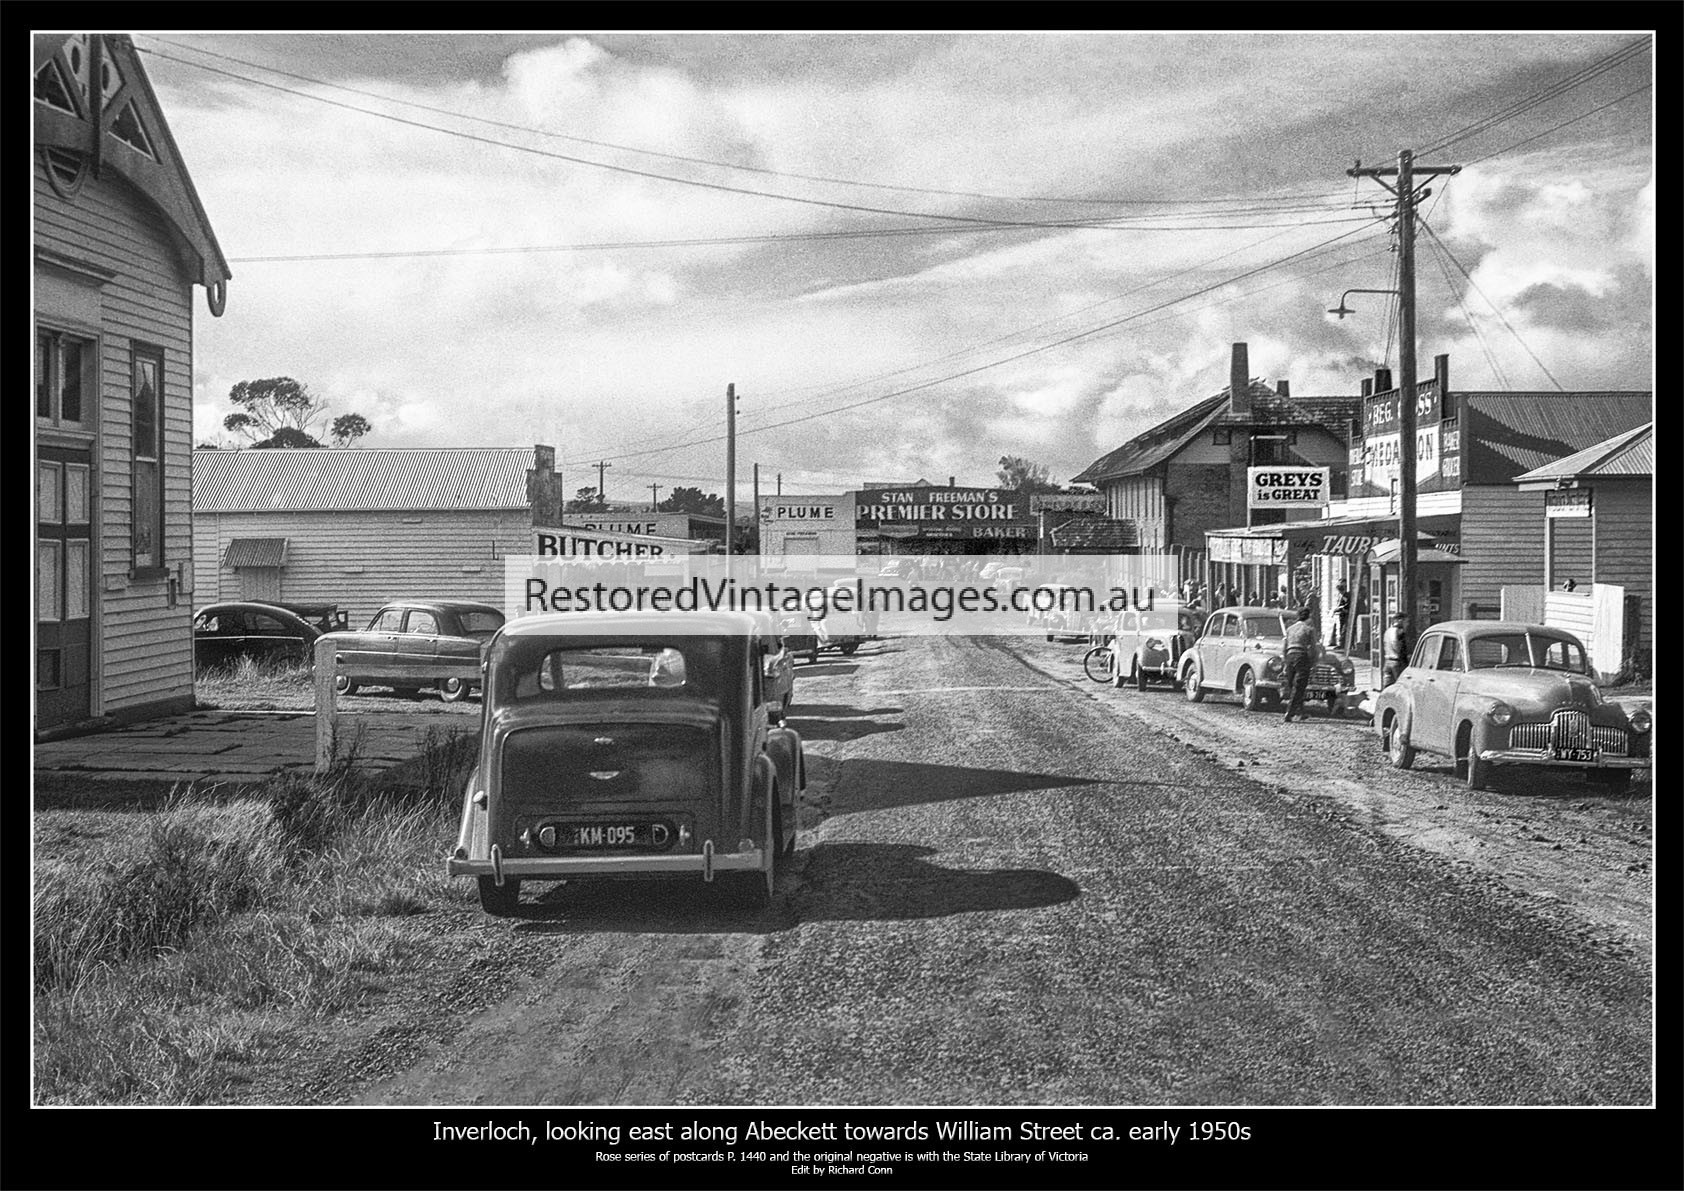 Inverloch In The Early 1950s – Looking East Along Abeckett Street From Near Reilly Street